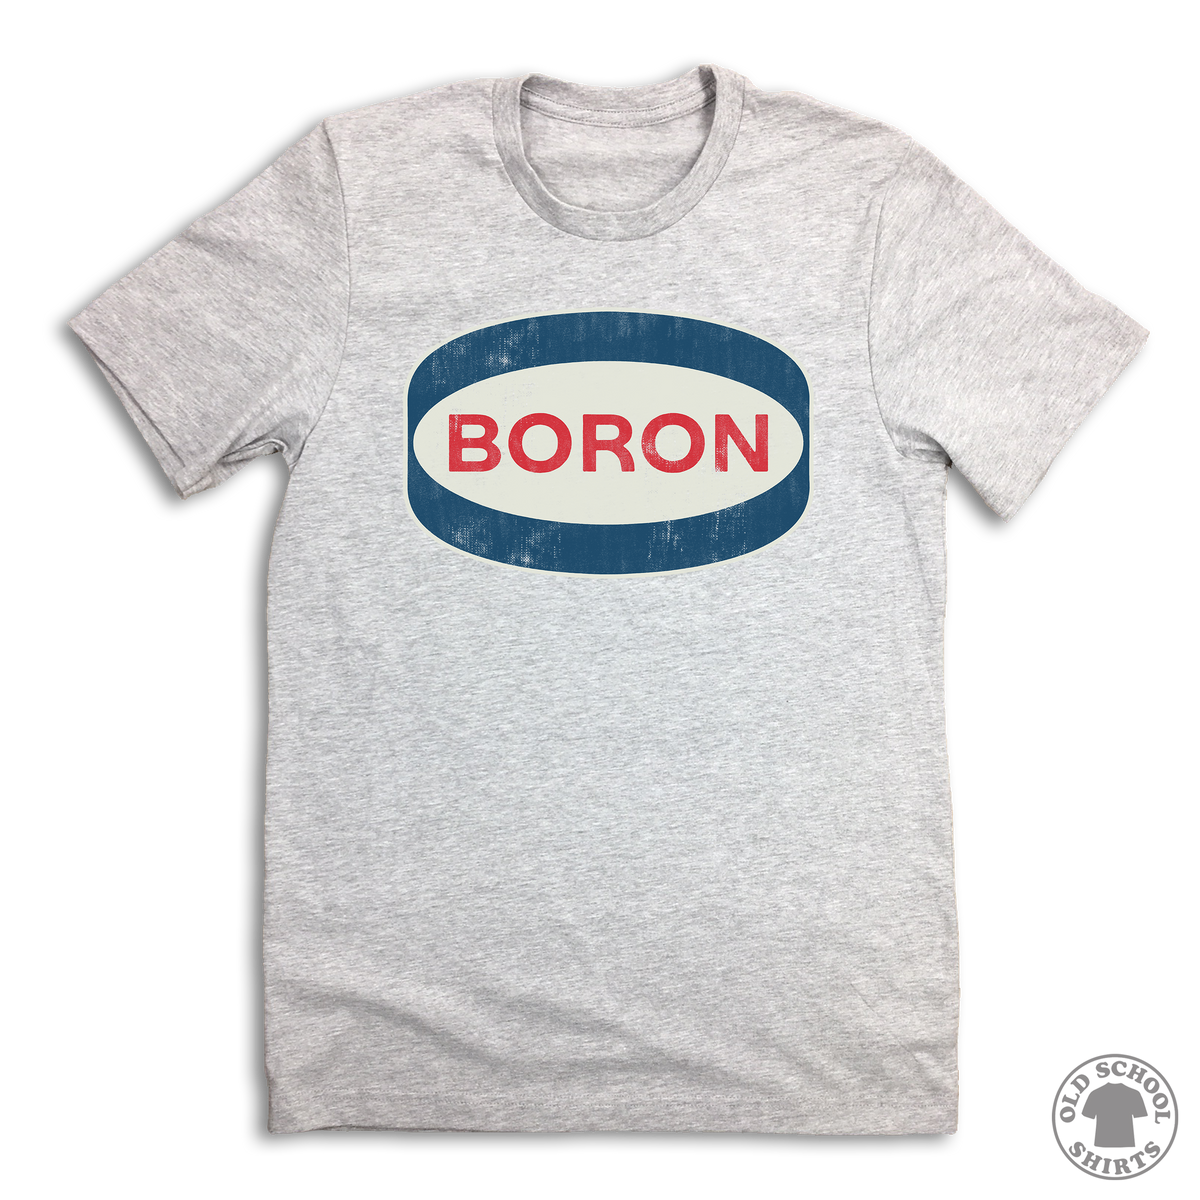 BORON - Old School Shirts- Retro Sports T Shirts